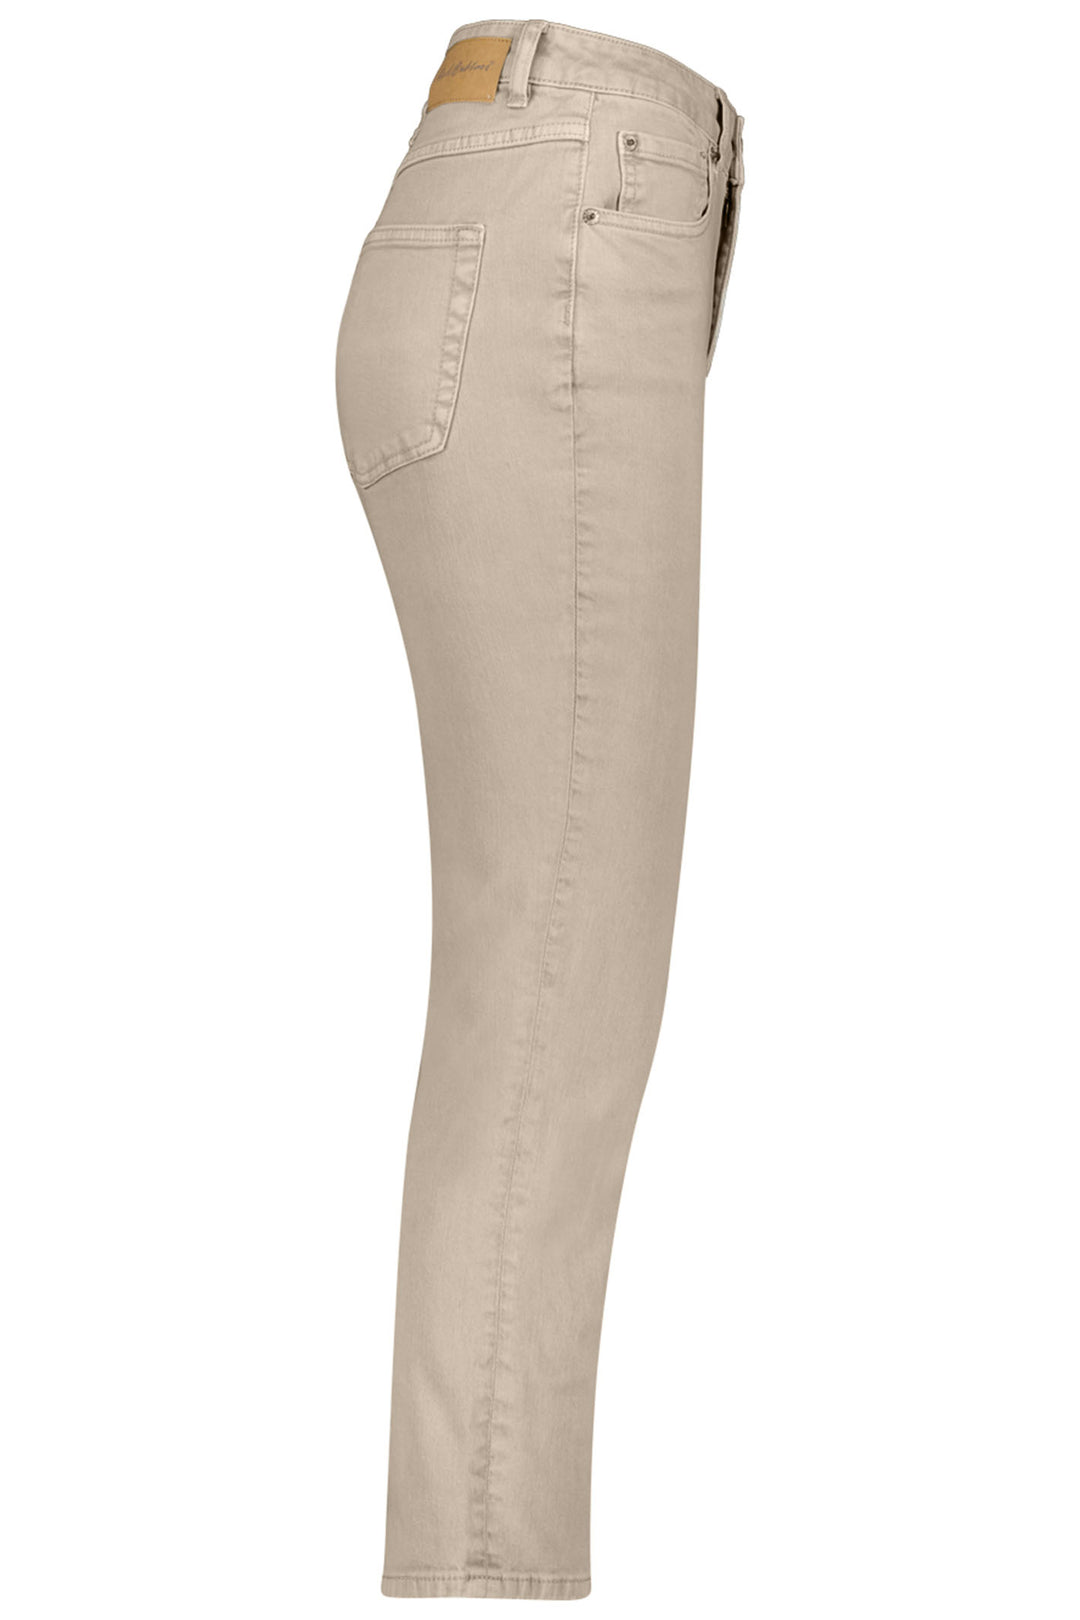 Red Button SRB4157 Tara Pebble Grey Denim Jeans 68cm - Olivia Grace Fashion